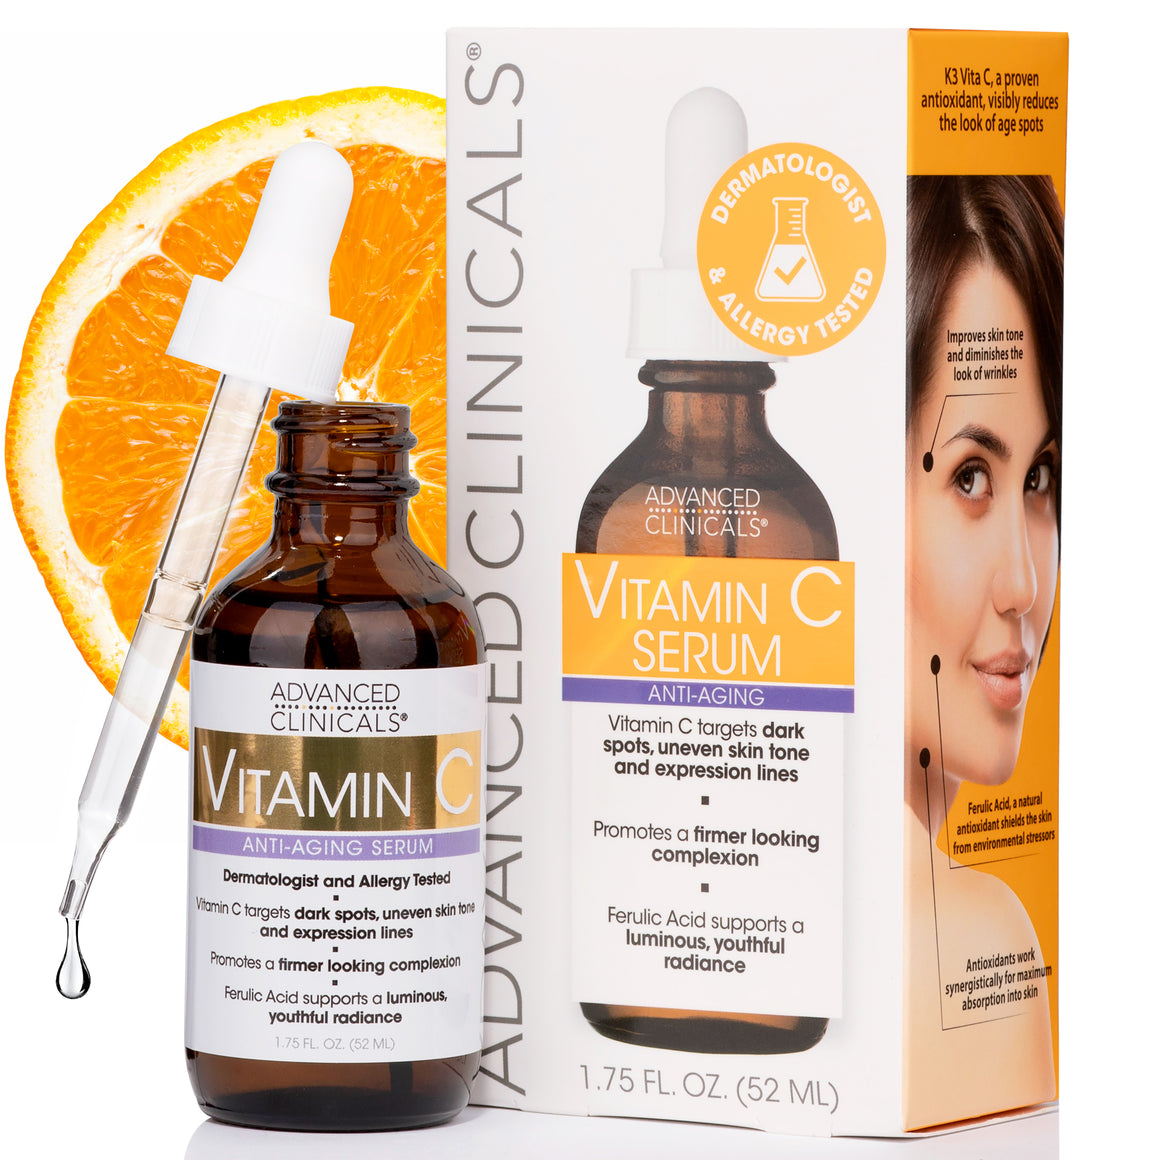 Vitamin C Brightening Serum